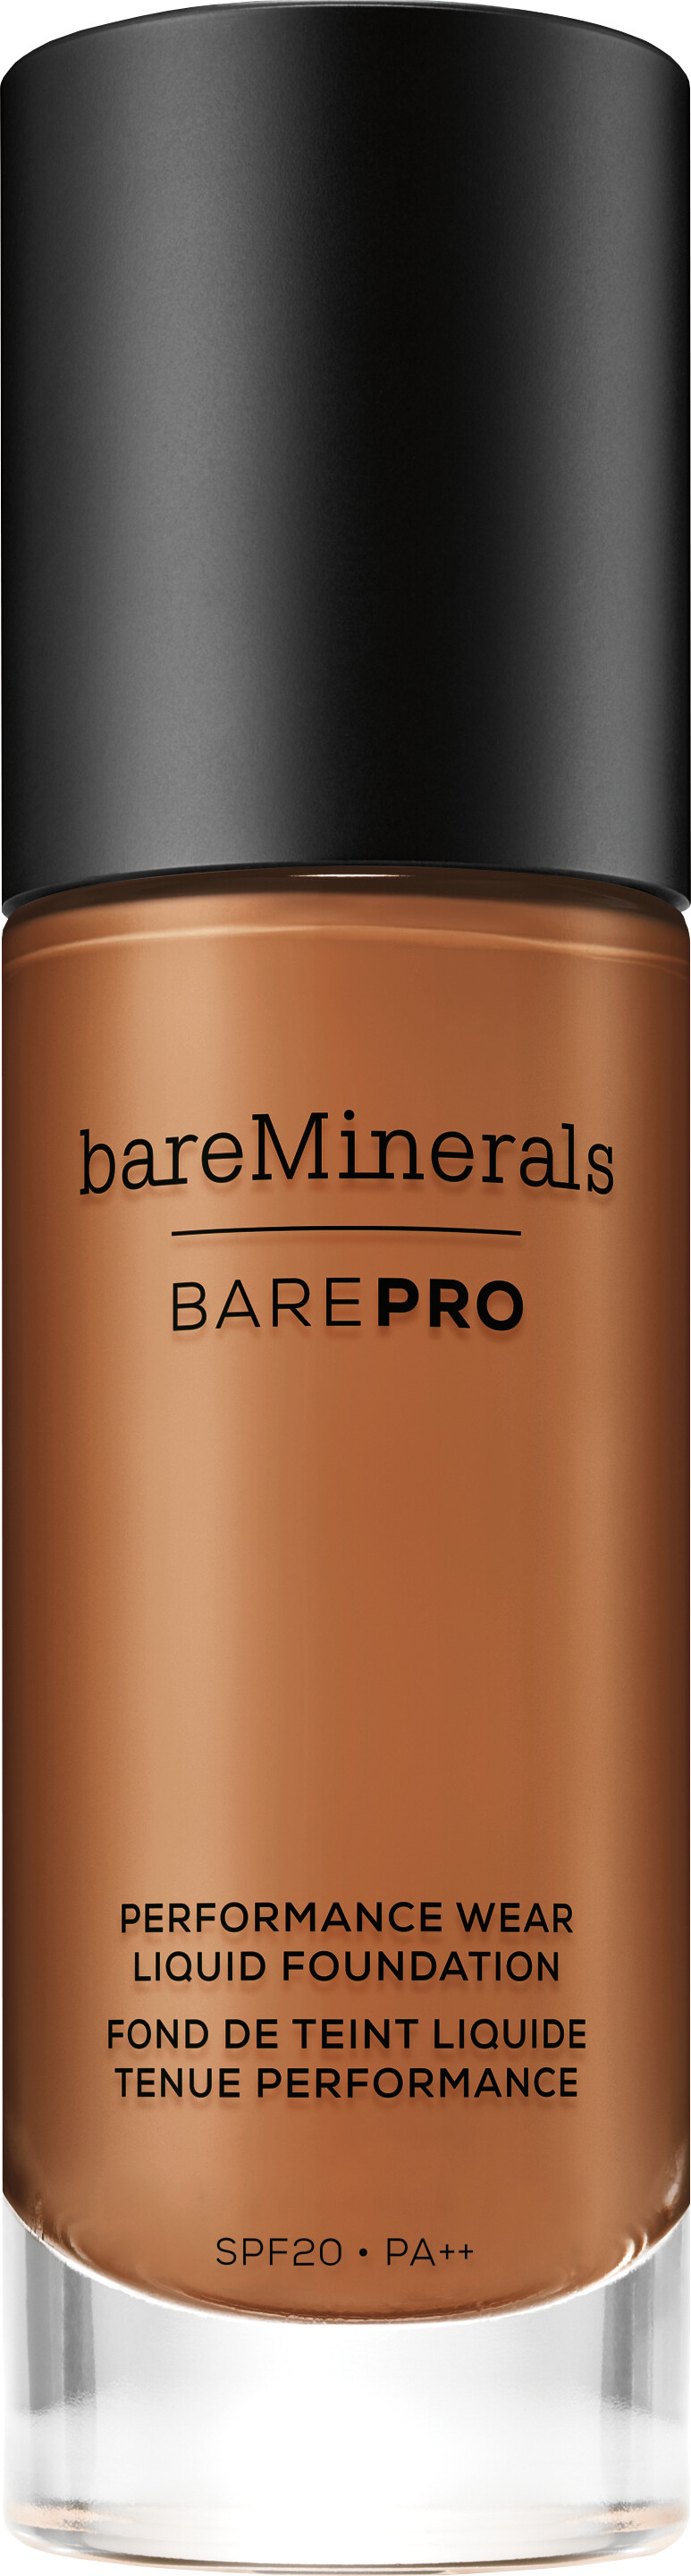 bareMinerals BAREPRO Performance Wear Liquid Foundation SPF20 30ml 25 - Cinnamon